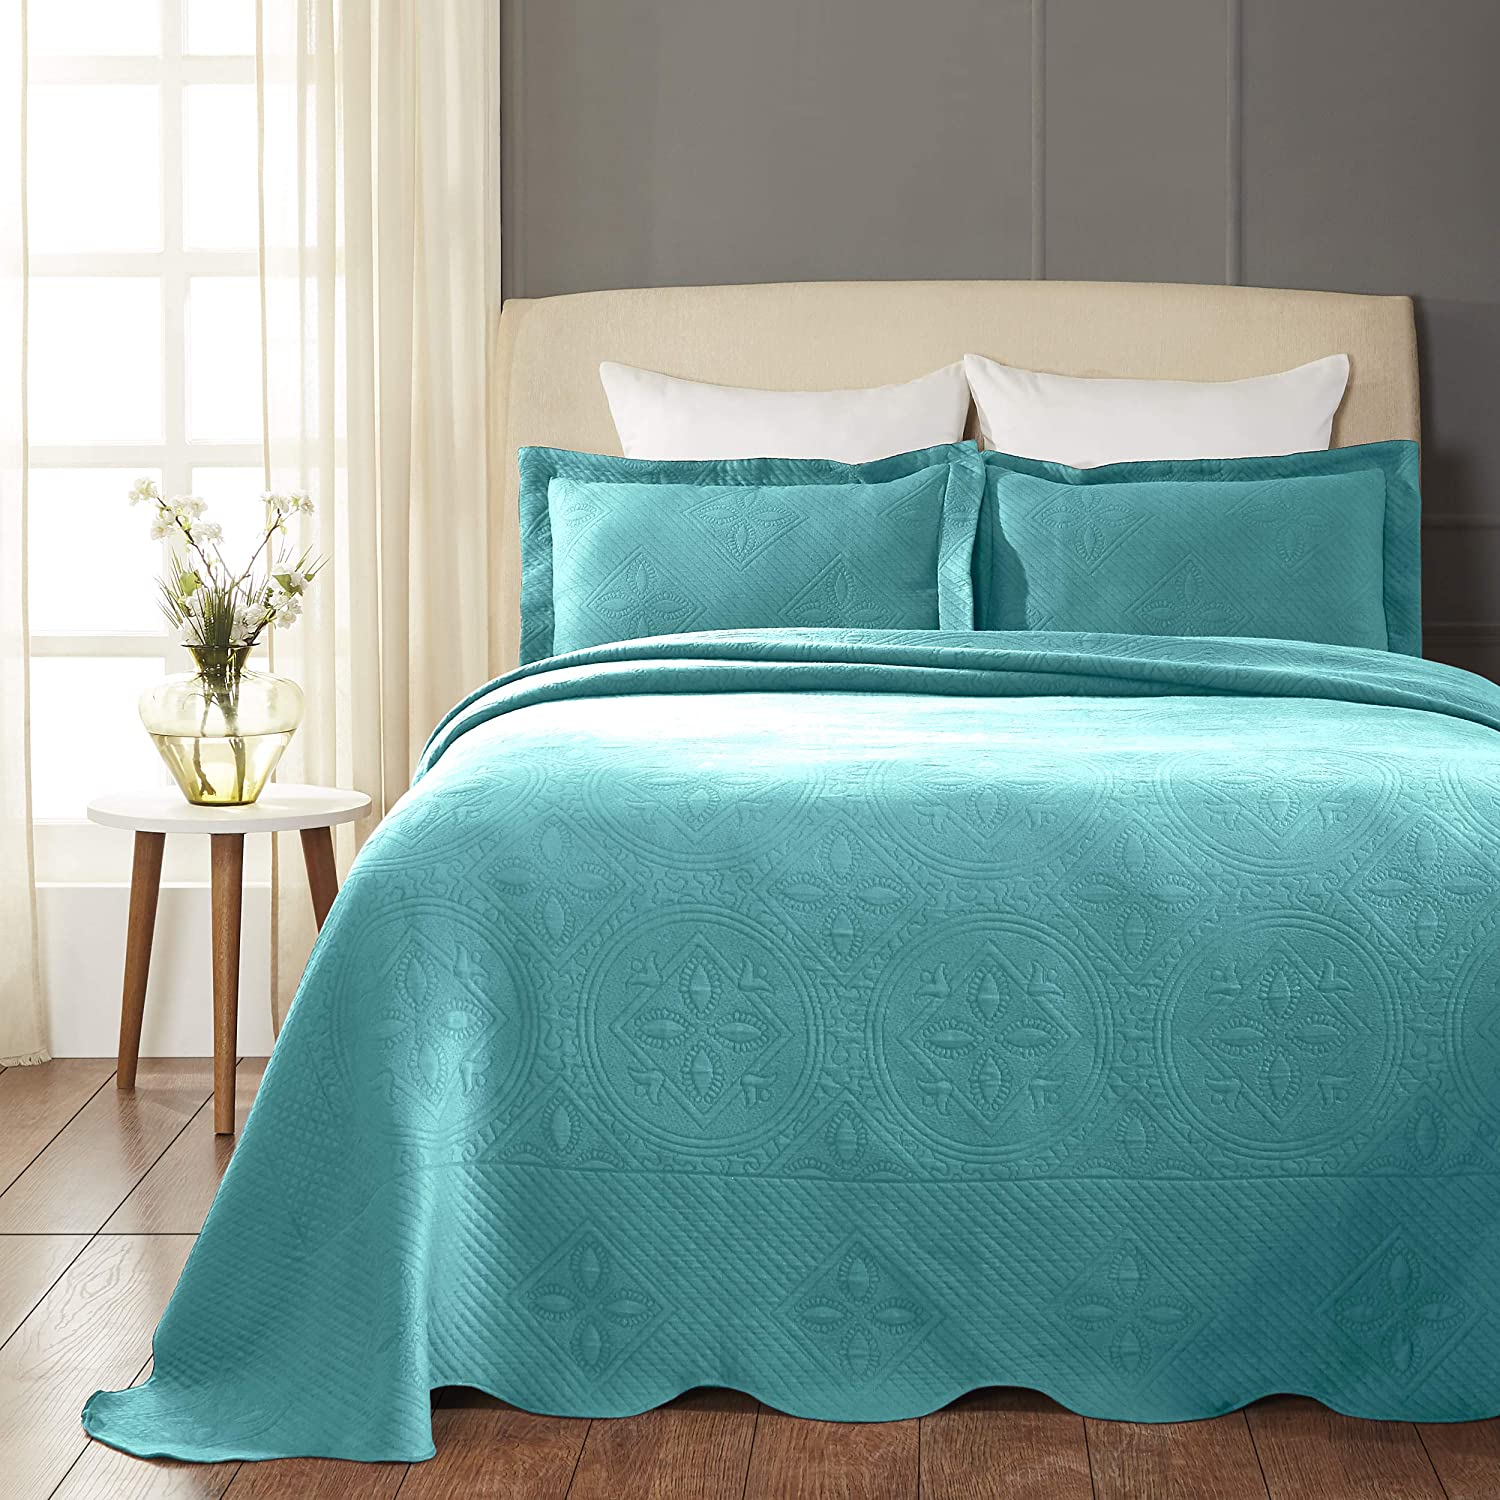 Details about   SUPERIOR 100% Cotton Celtic Circles 3-Piece Scalloped Bedspread Set Peac Queen 